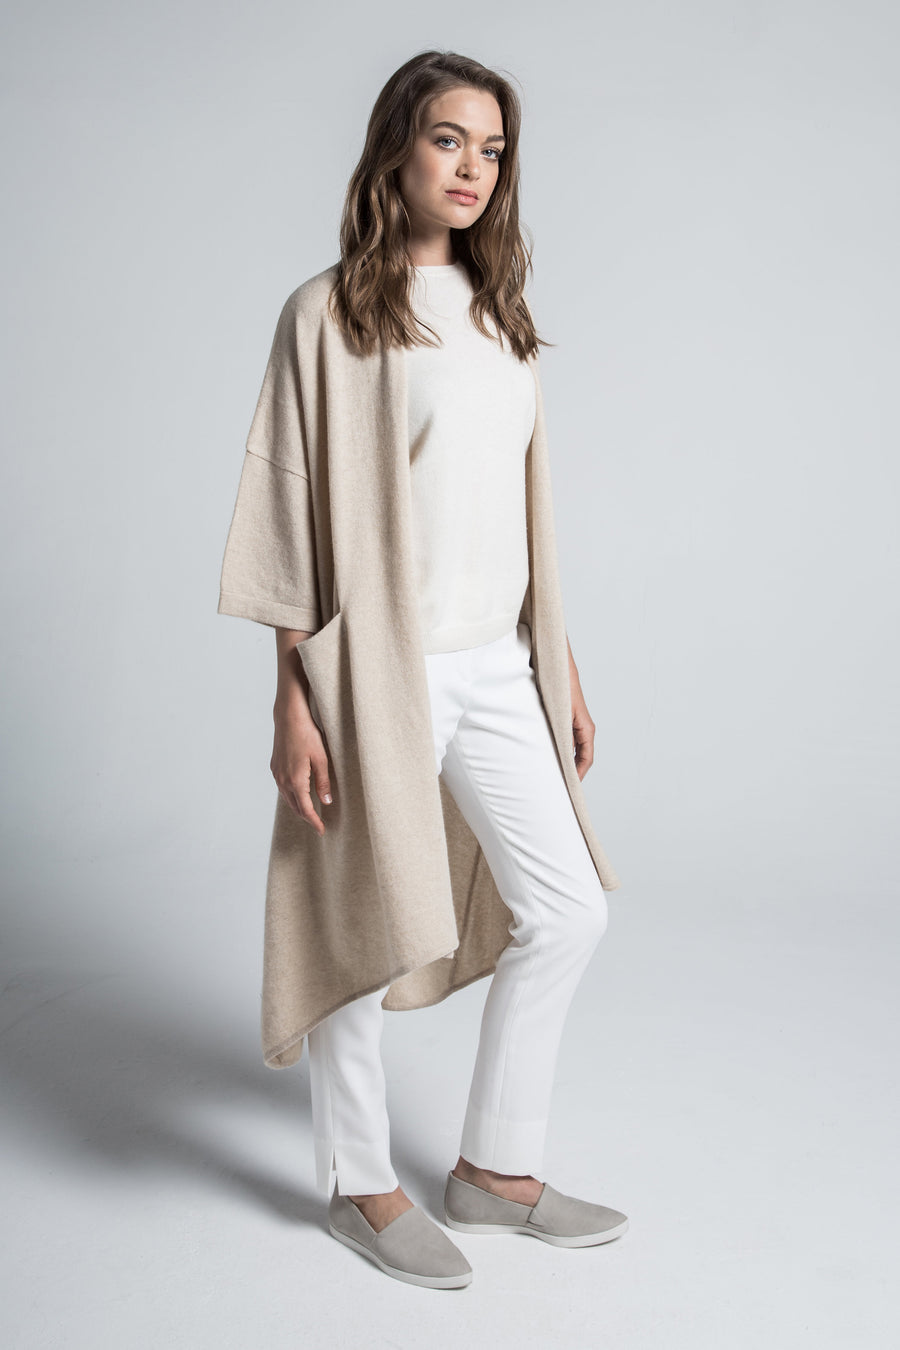 pine cashmere celine women's loose fit 100% pure organic cashmere cardigan coat in tan beige